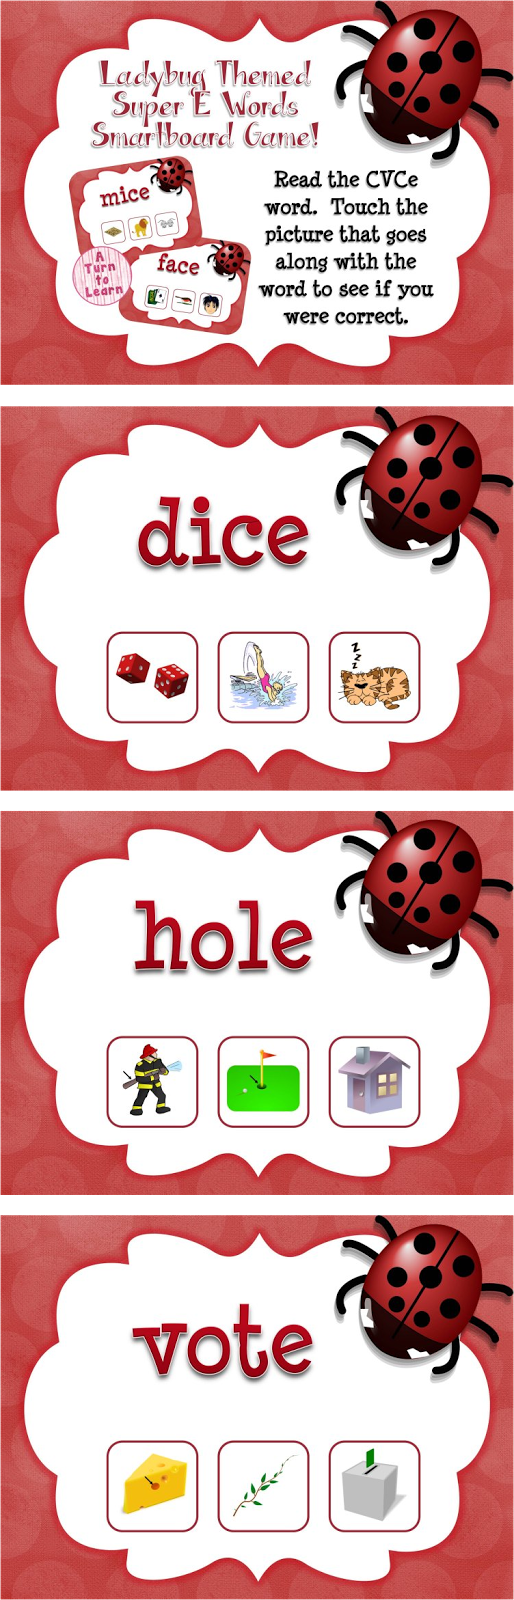 Ladybug Themed CVCe Words Game for Smartboard or Promethean Board!